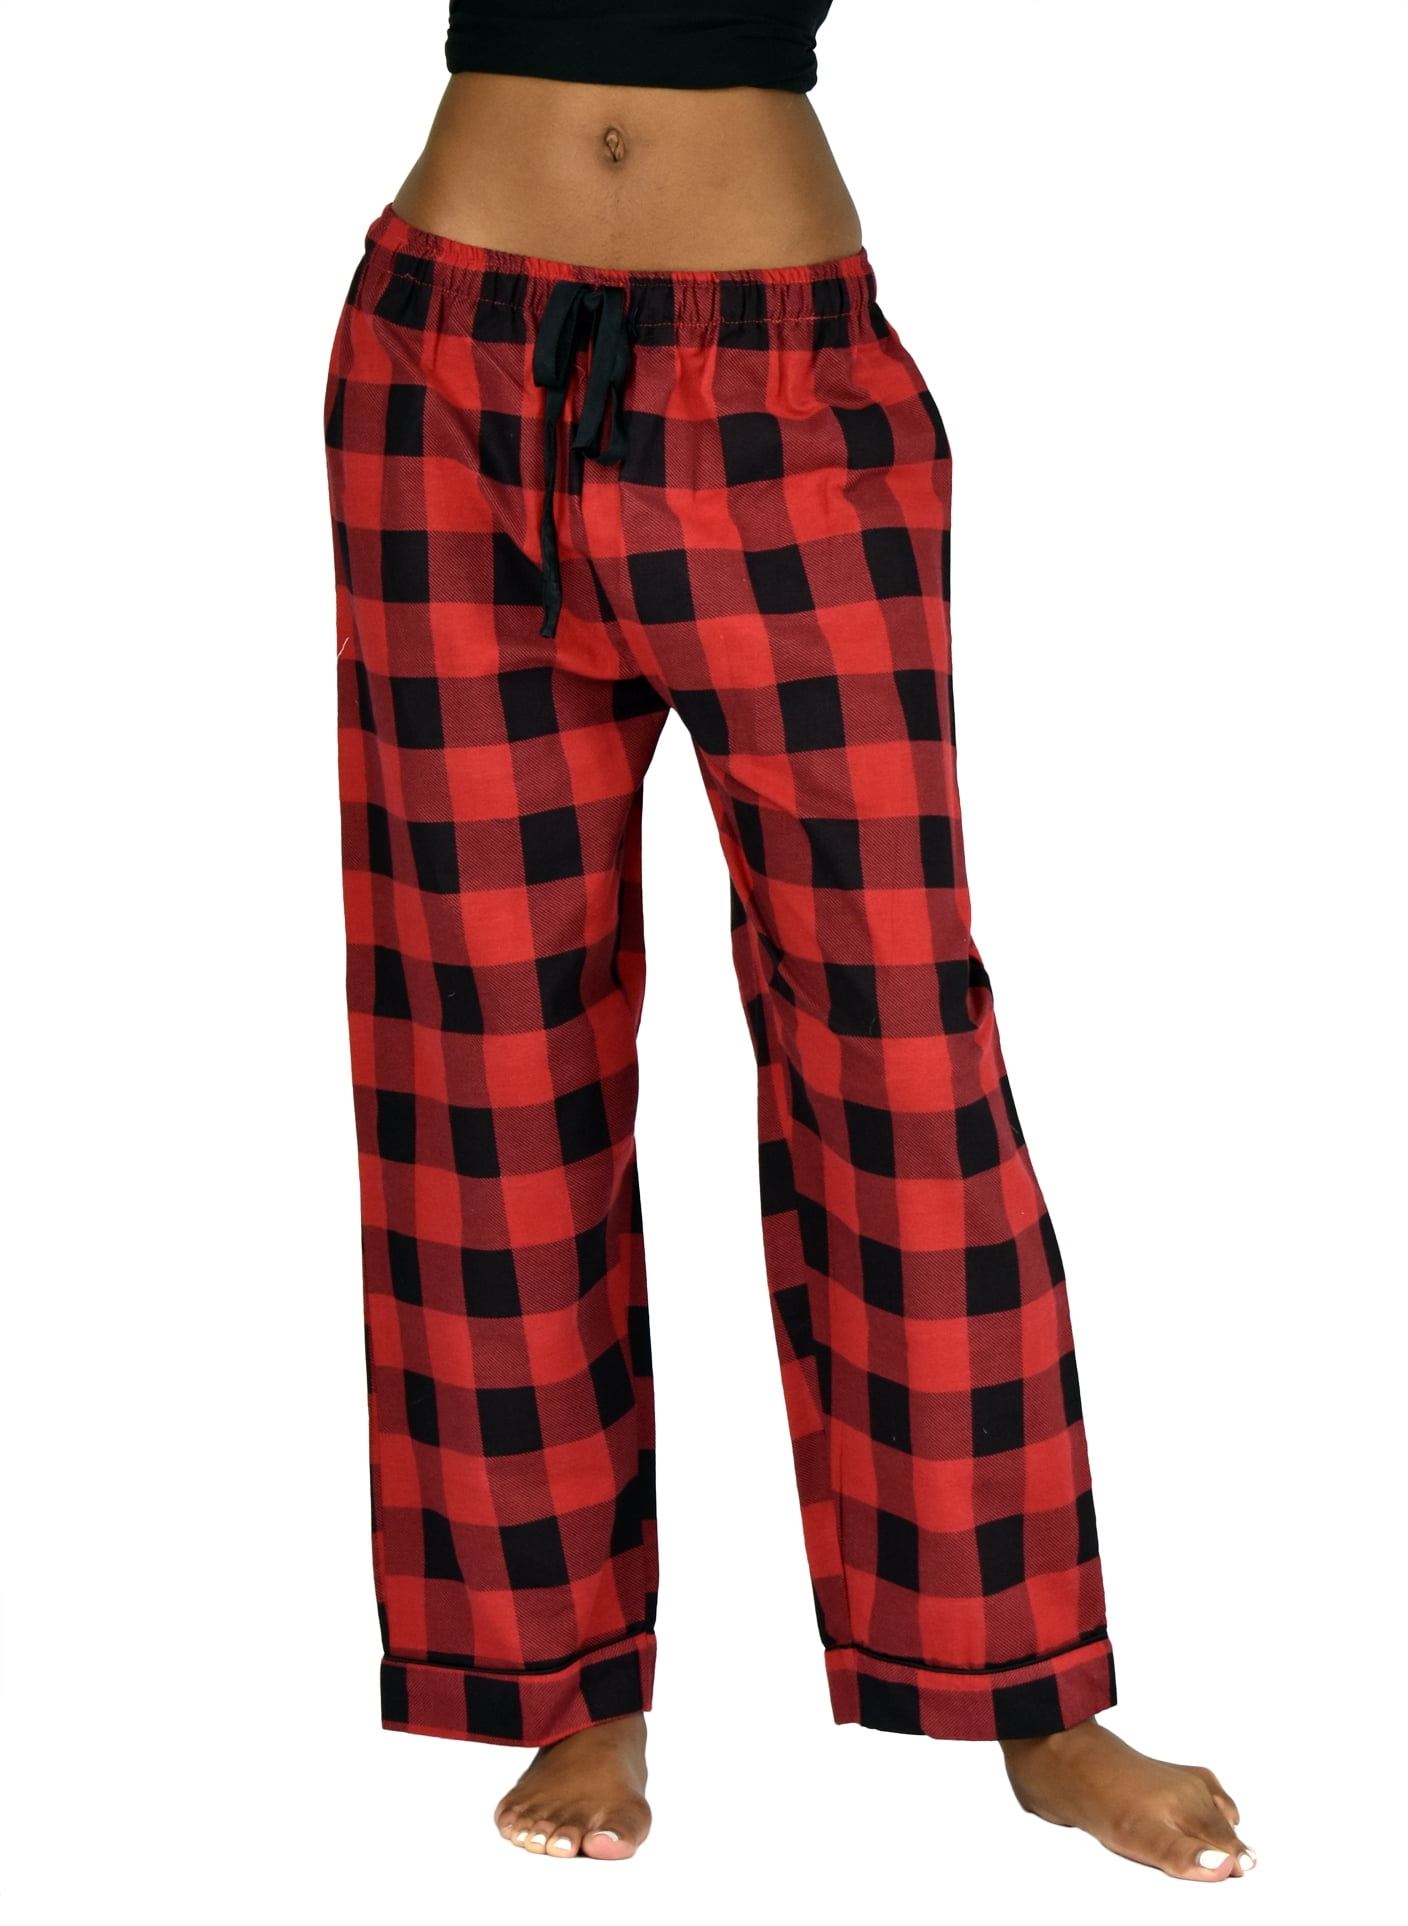 Up2date Fashion's Women's 100% Cotton Flannel Pajama / Sleep / Lounge ...